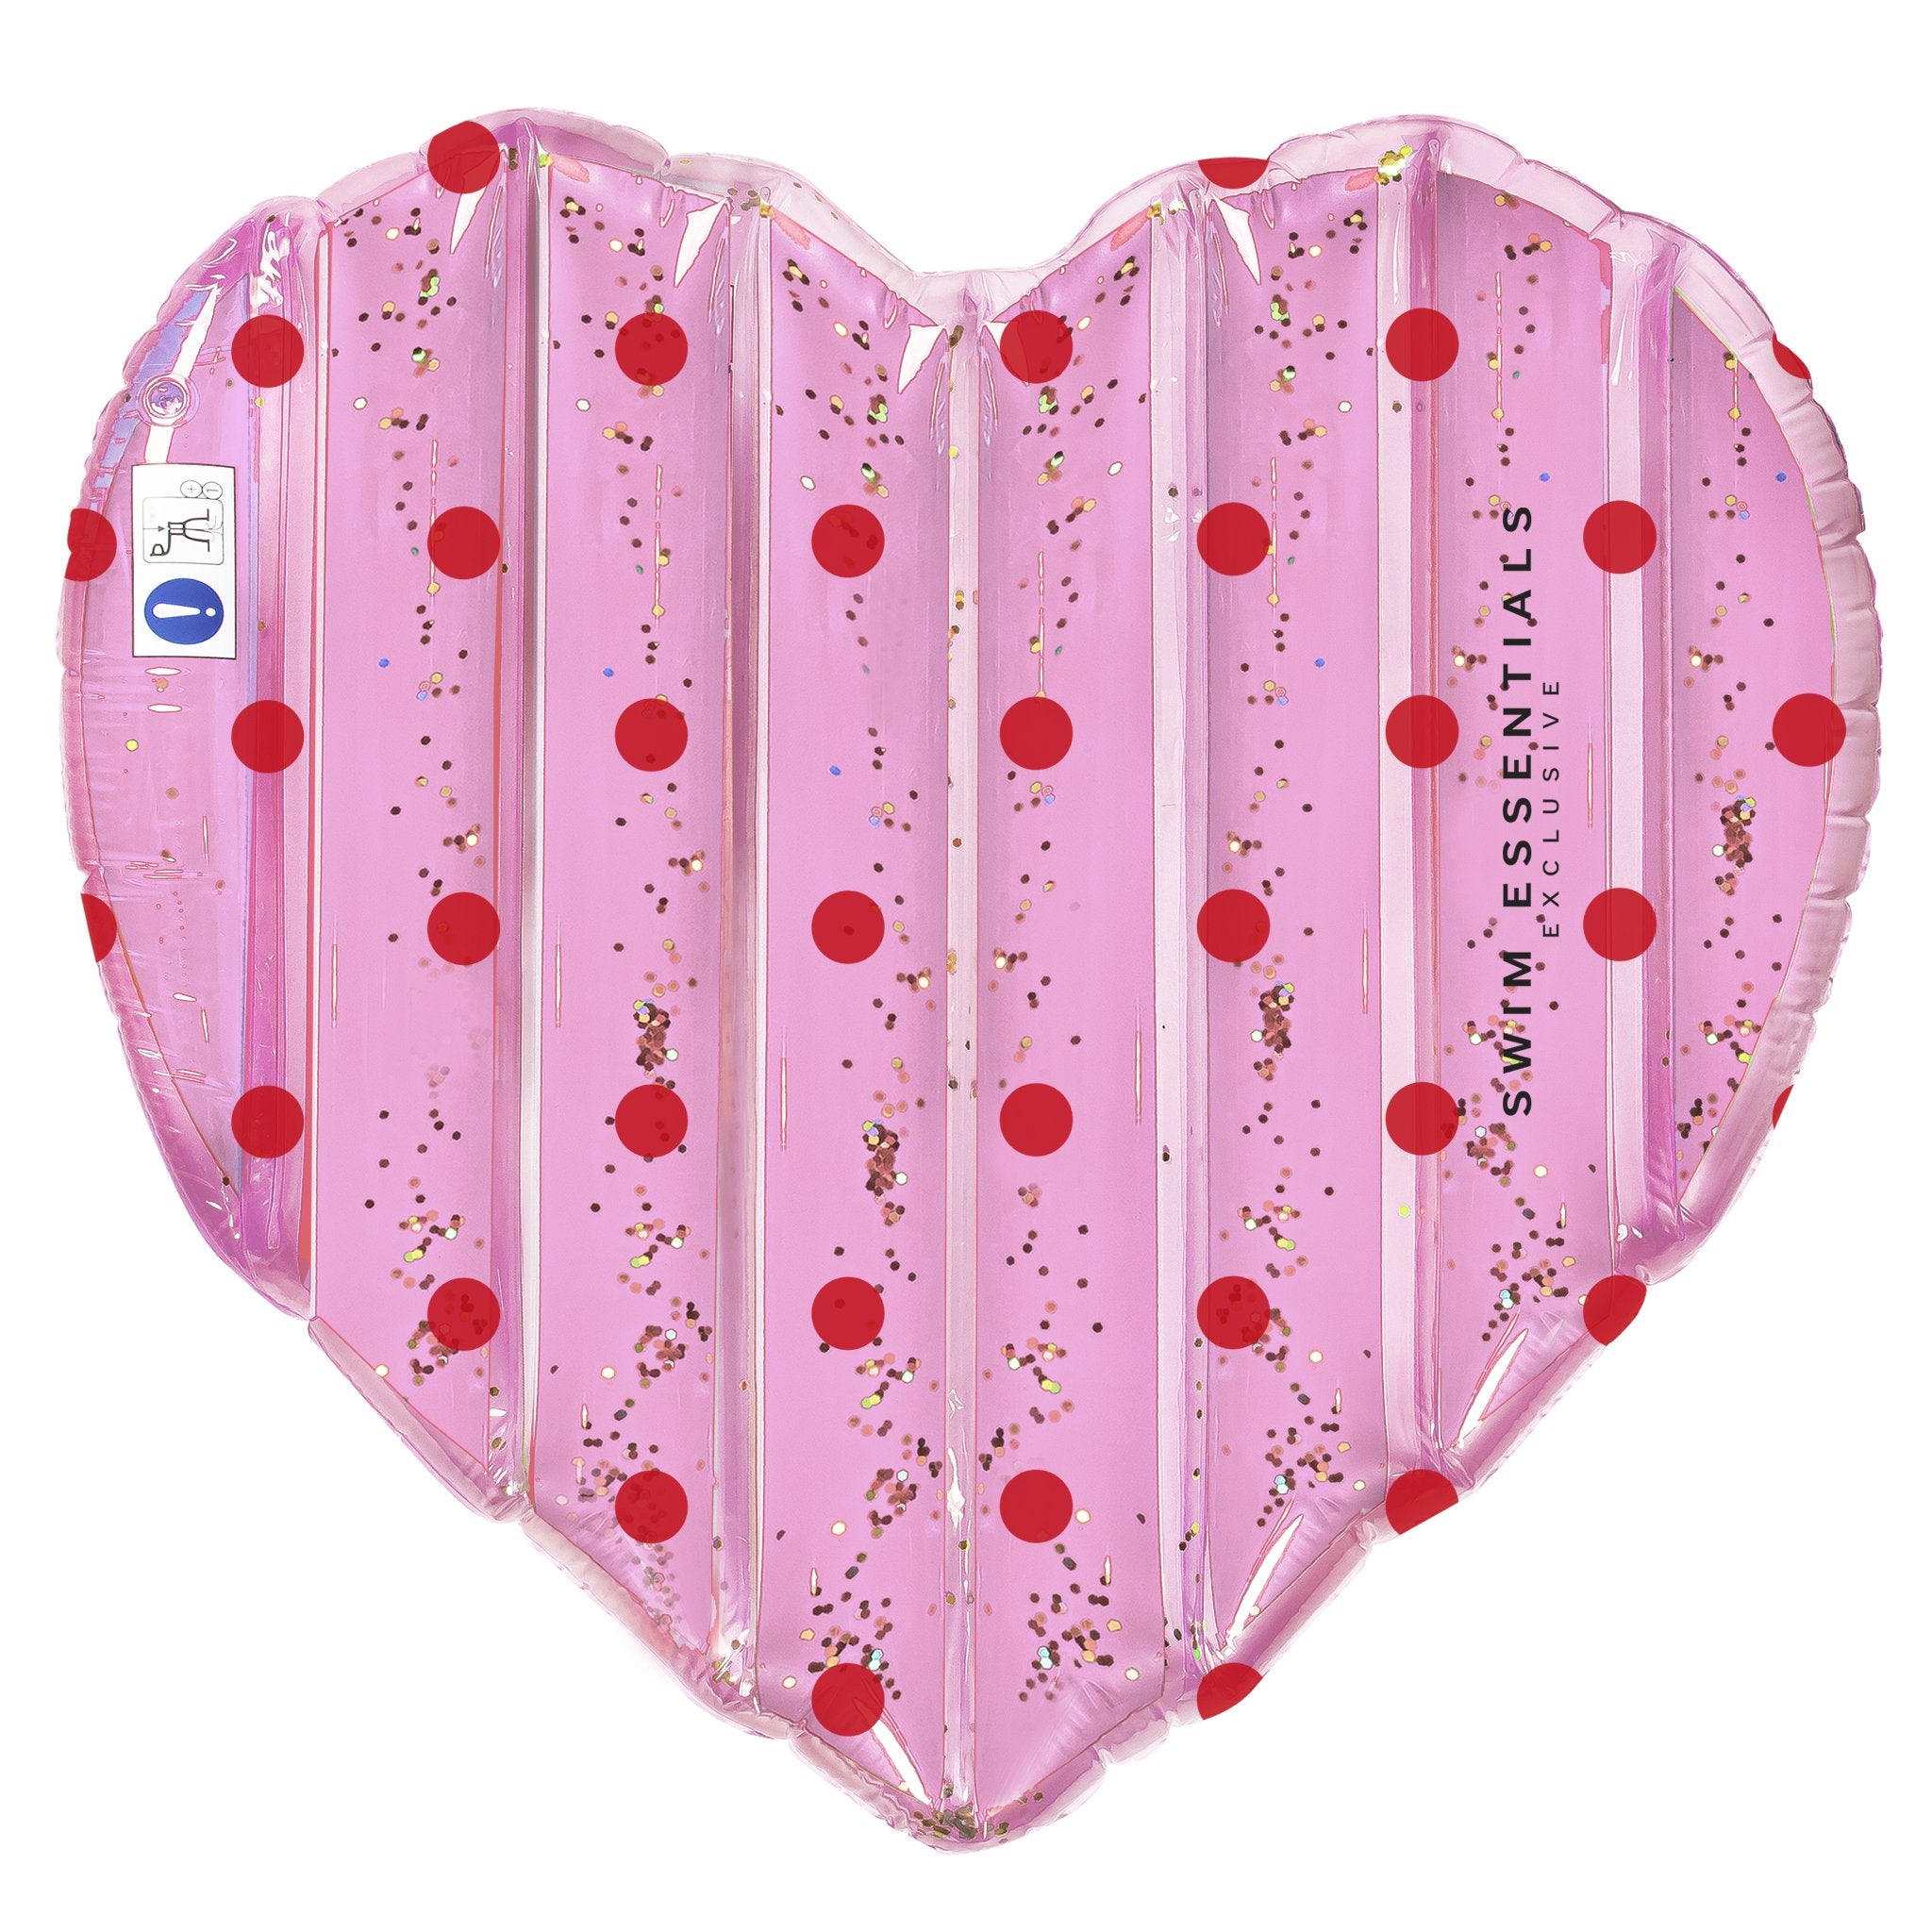 Swim Essentials - Pink heart glitter air mattress